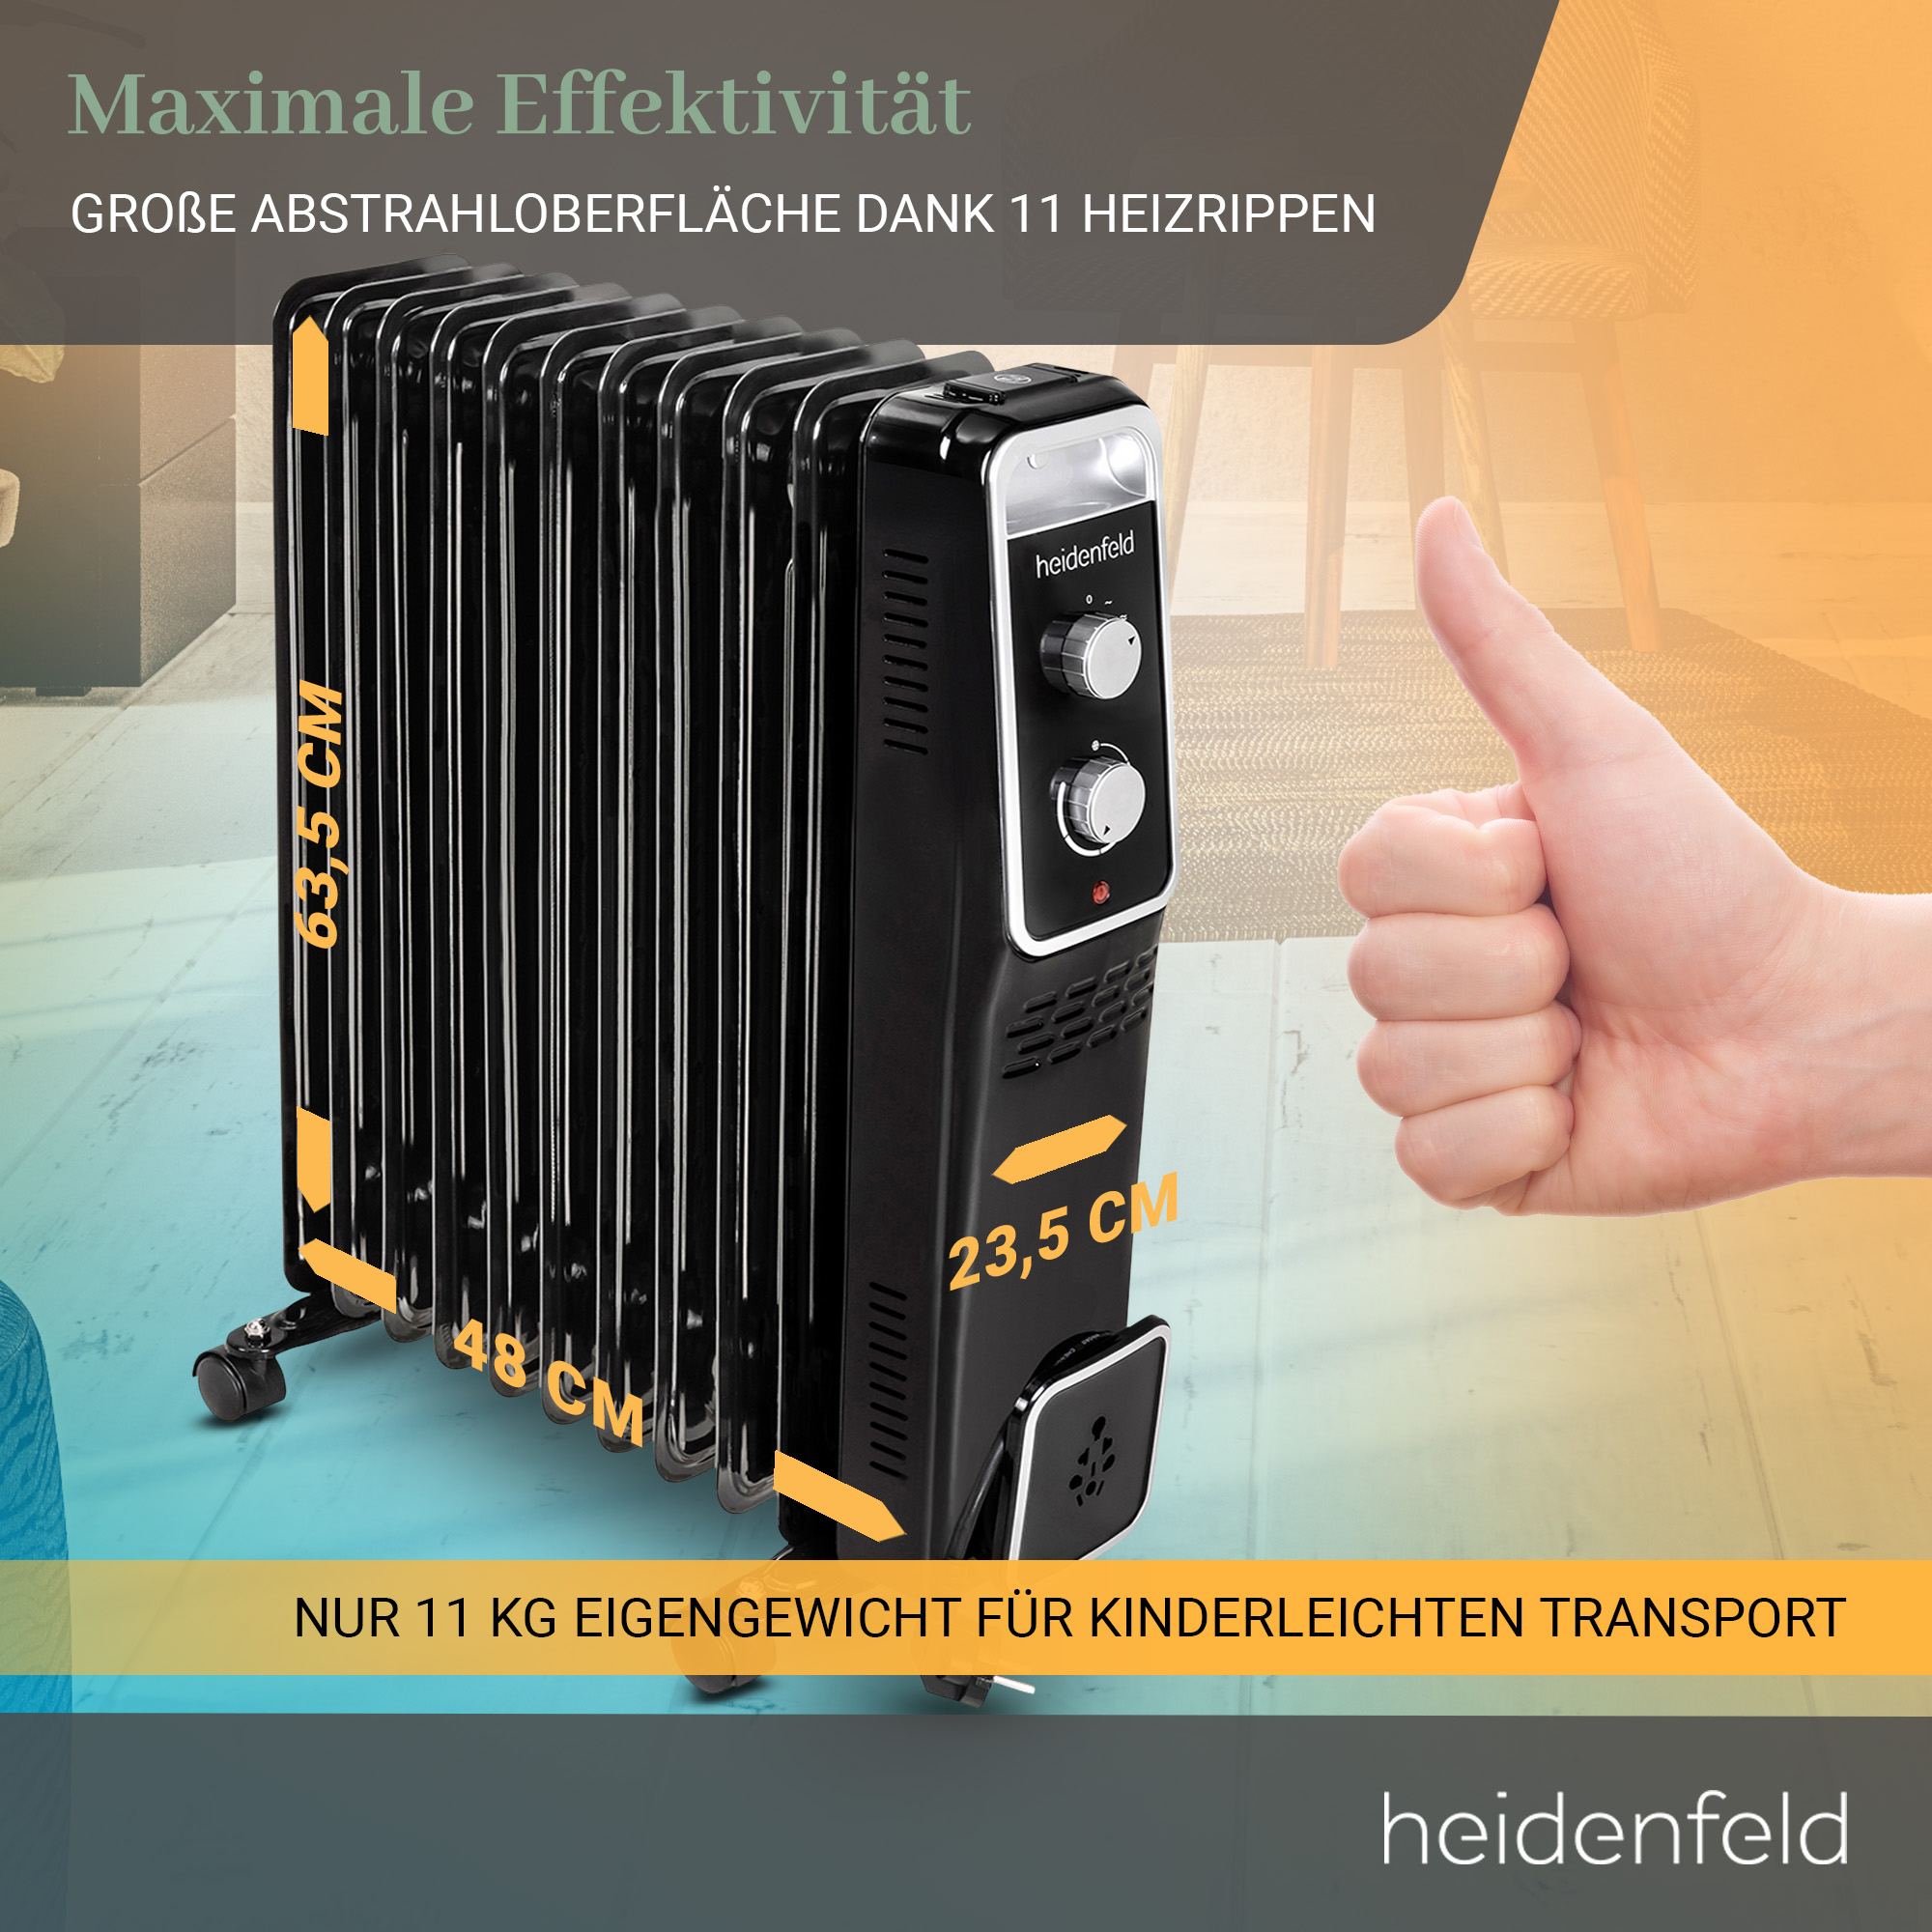 ÖR100, stufenweise Heidenfeld Thermostat, HEIDENFELD Regulierung Ölradiator 1000-2500 Watt, (2500 Watt) Ölradiator